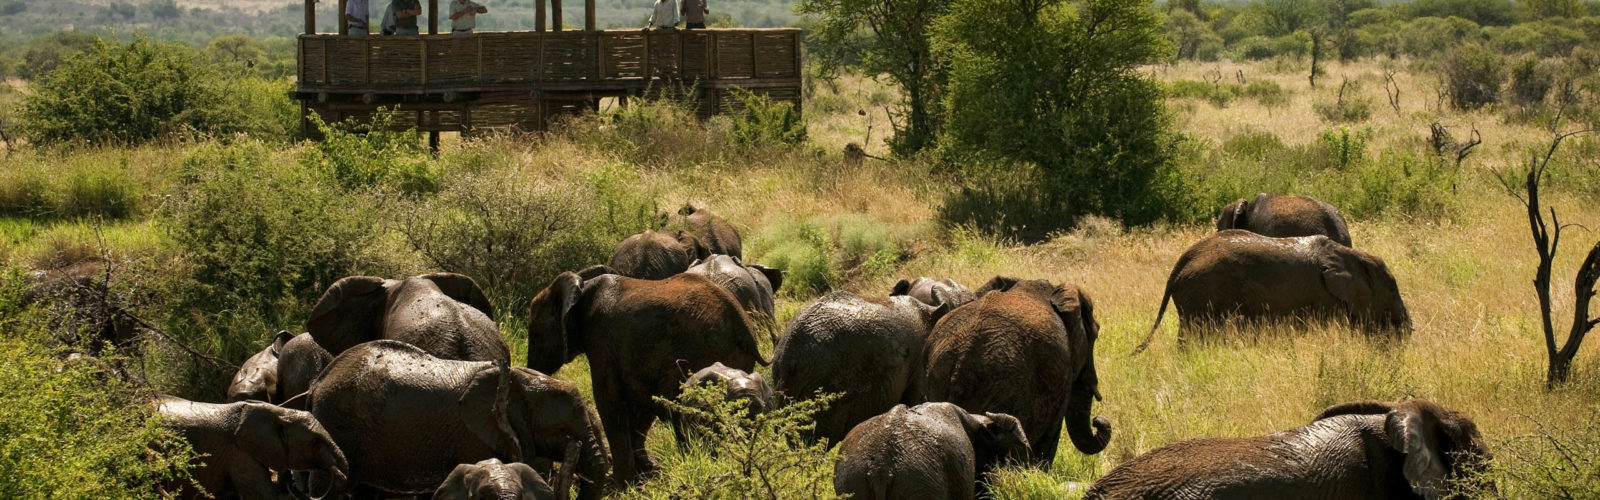 elephants-madikwe-game-reserve-south-africa